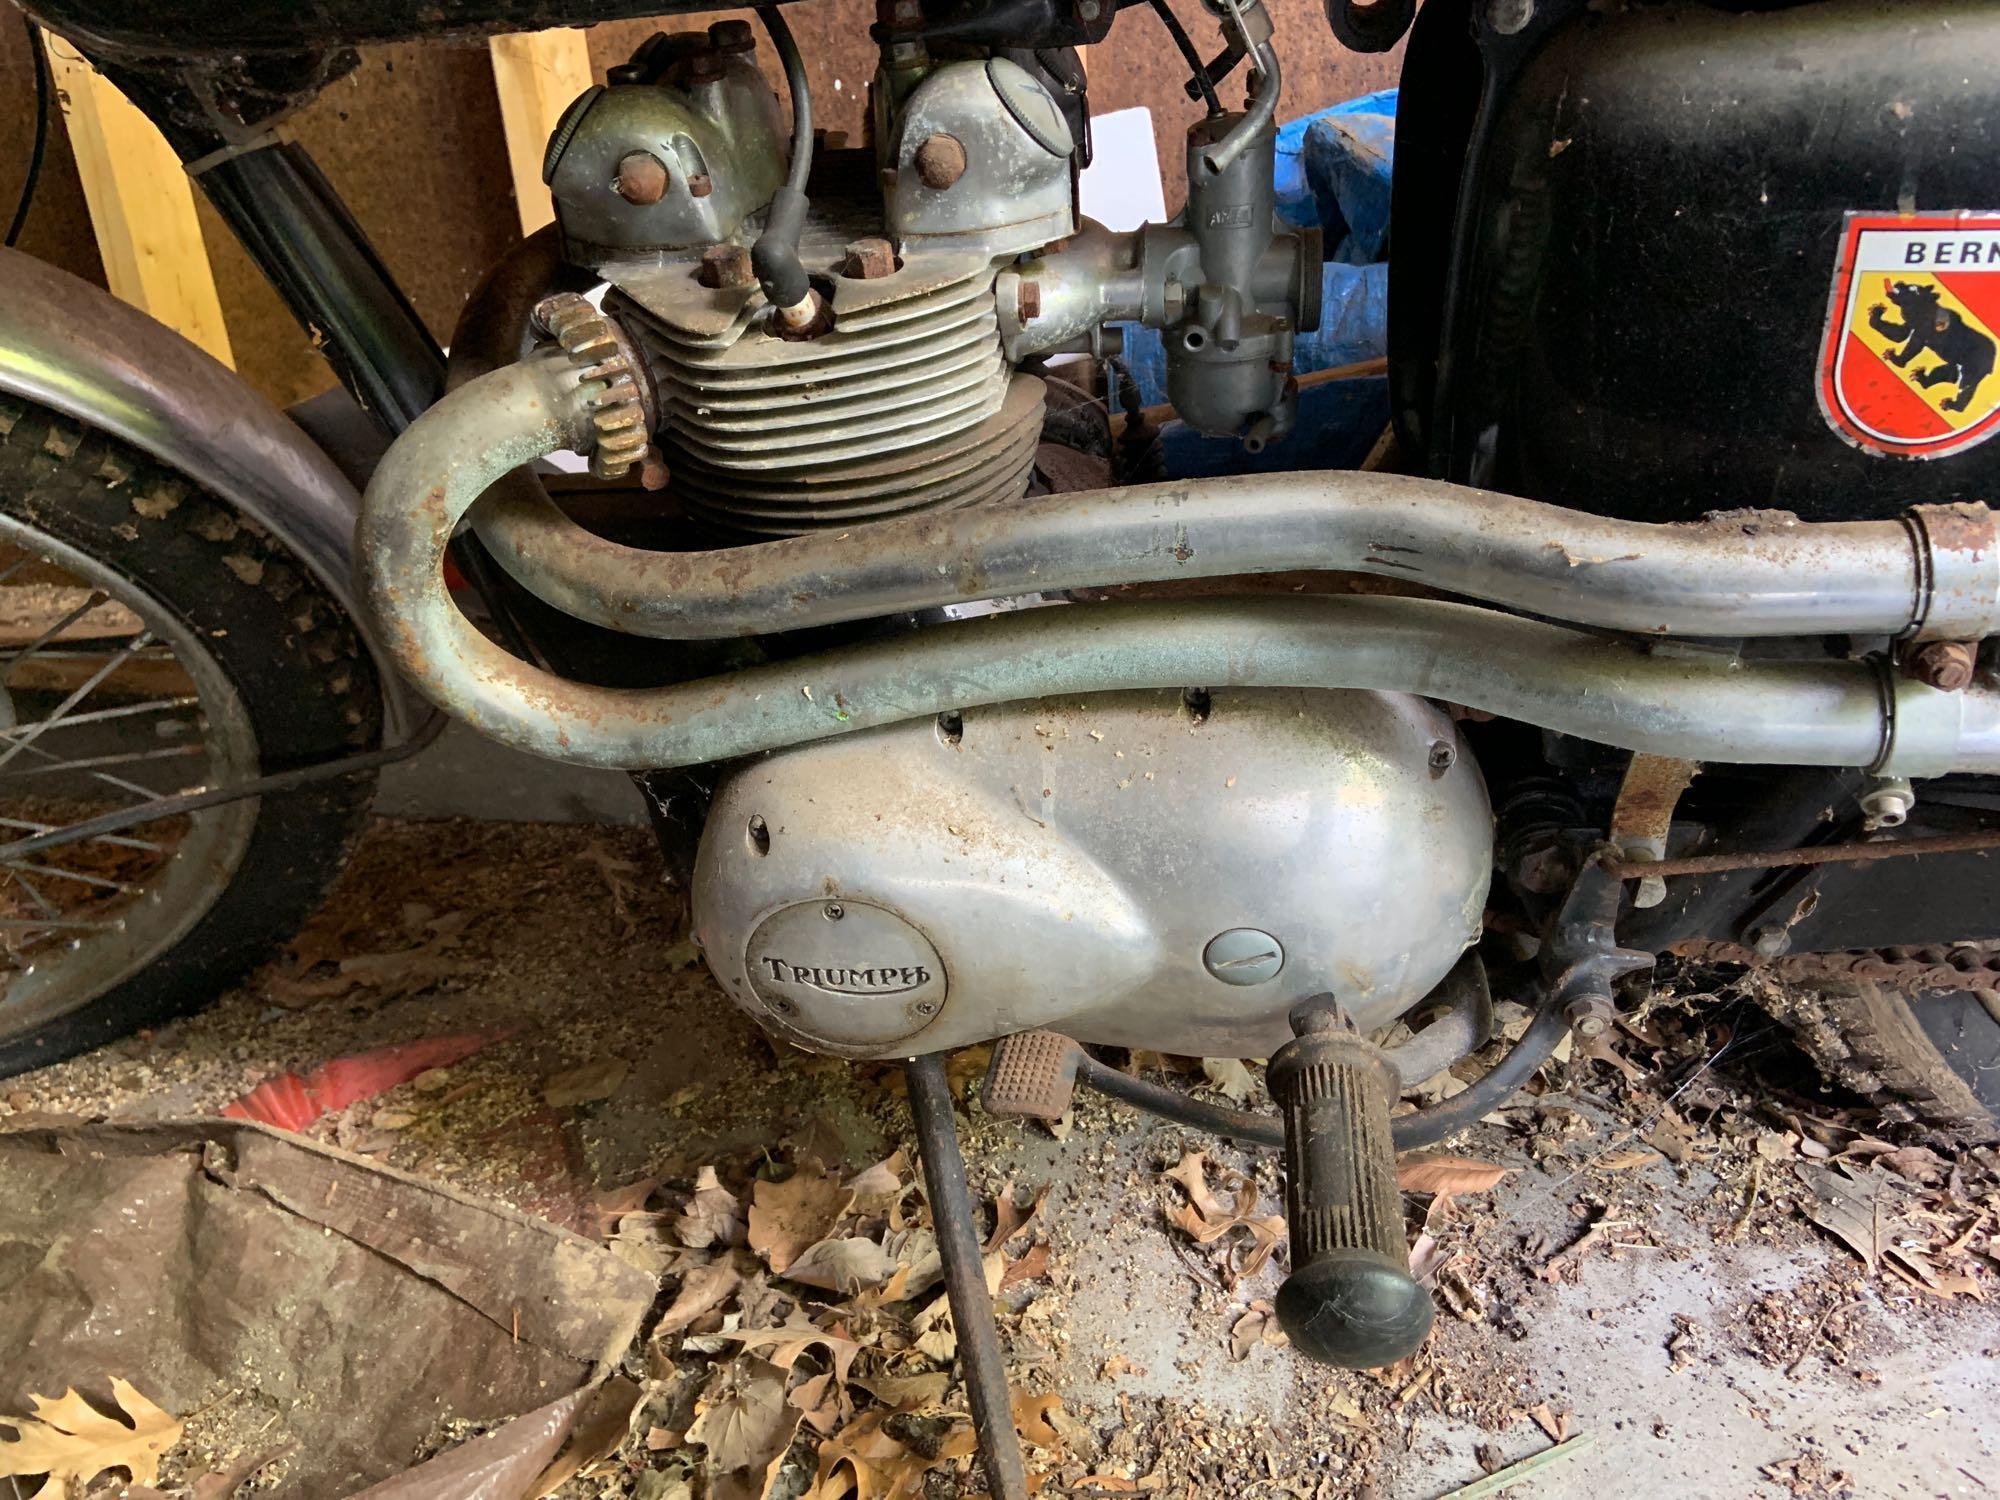 Vintage triumph motorcycle for parts